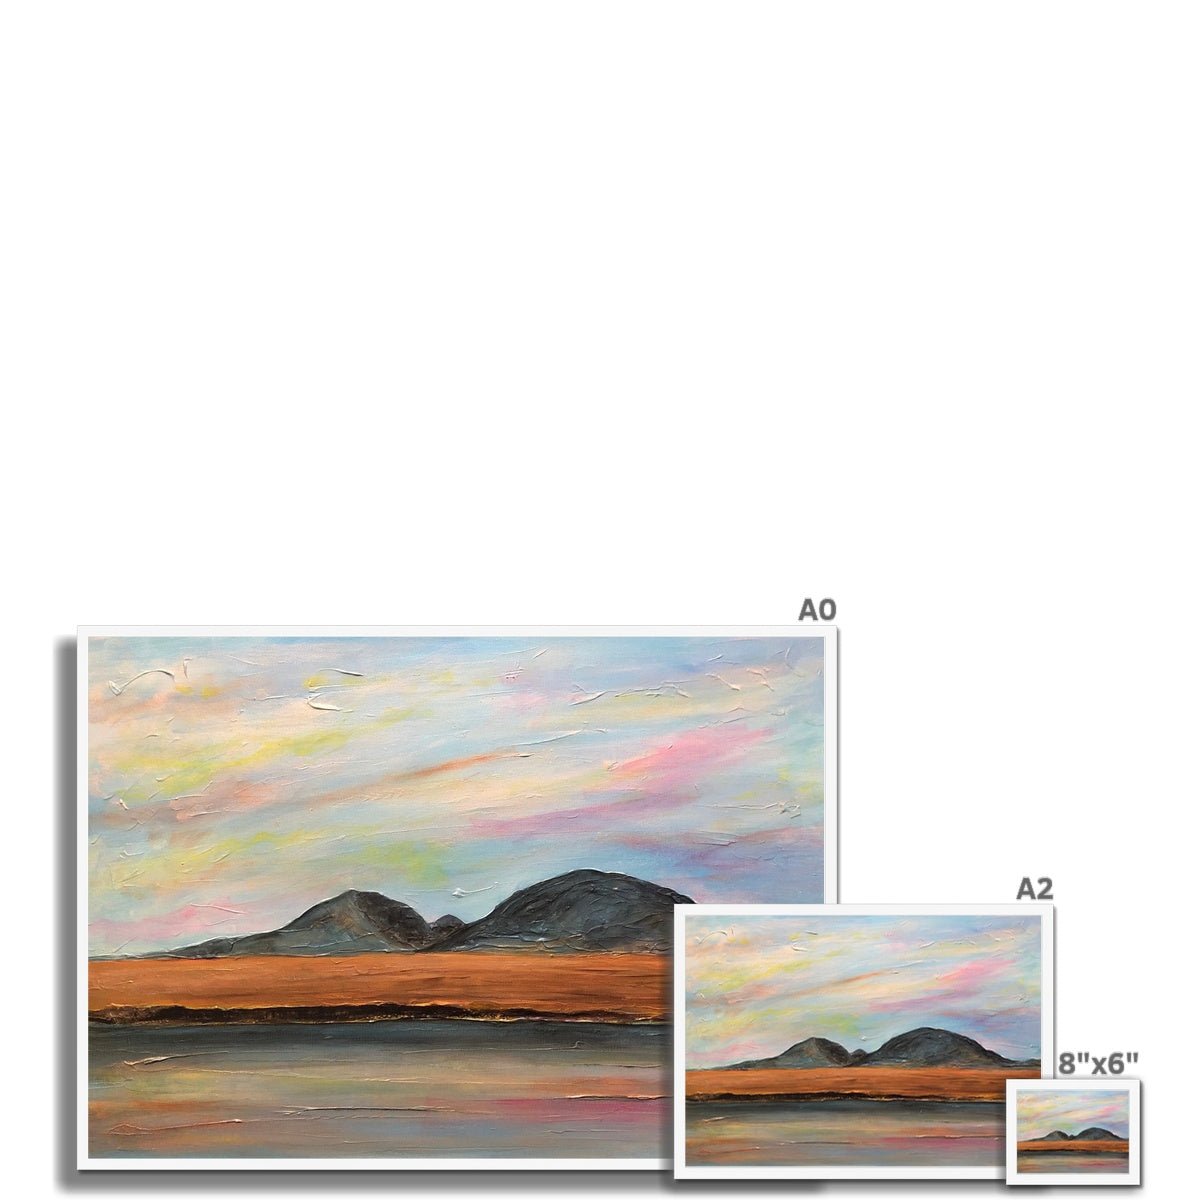 Jura Dawn Painting | Framed Prints From Scotland-Framed Prints-Hebridean Islands Art Gallery-Paintings, Prints, Homeware, Art Gifts From Scotland By Scottish Artist Kevin Hunter